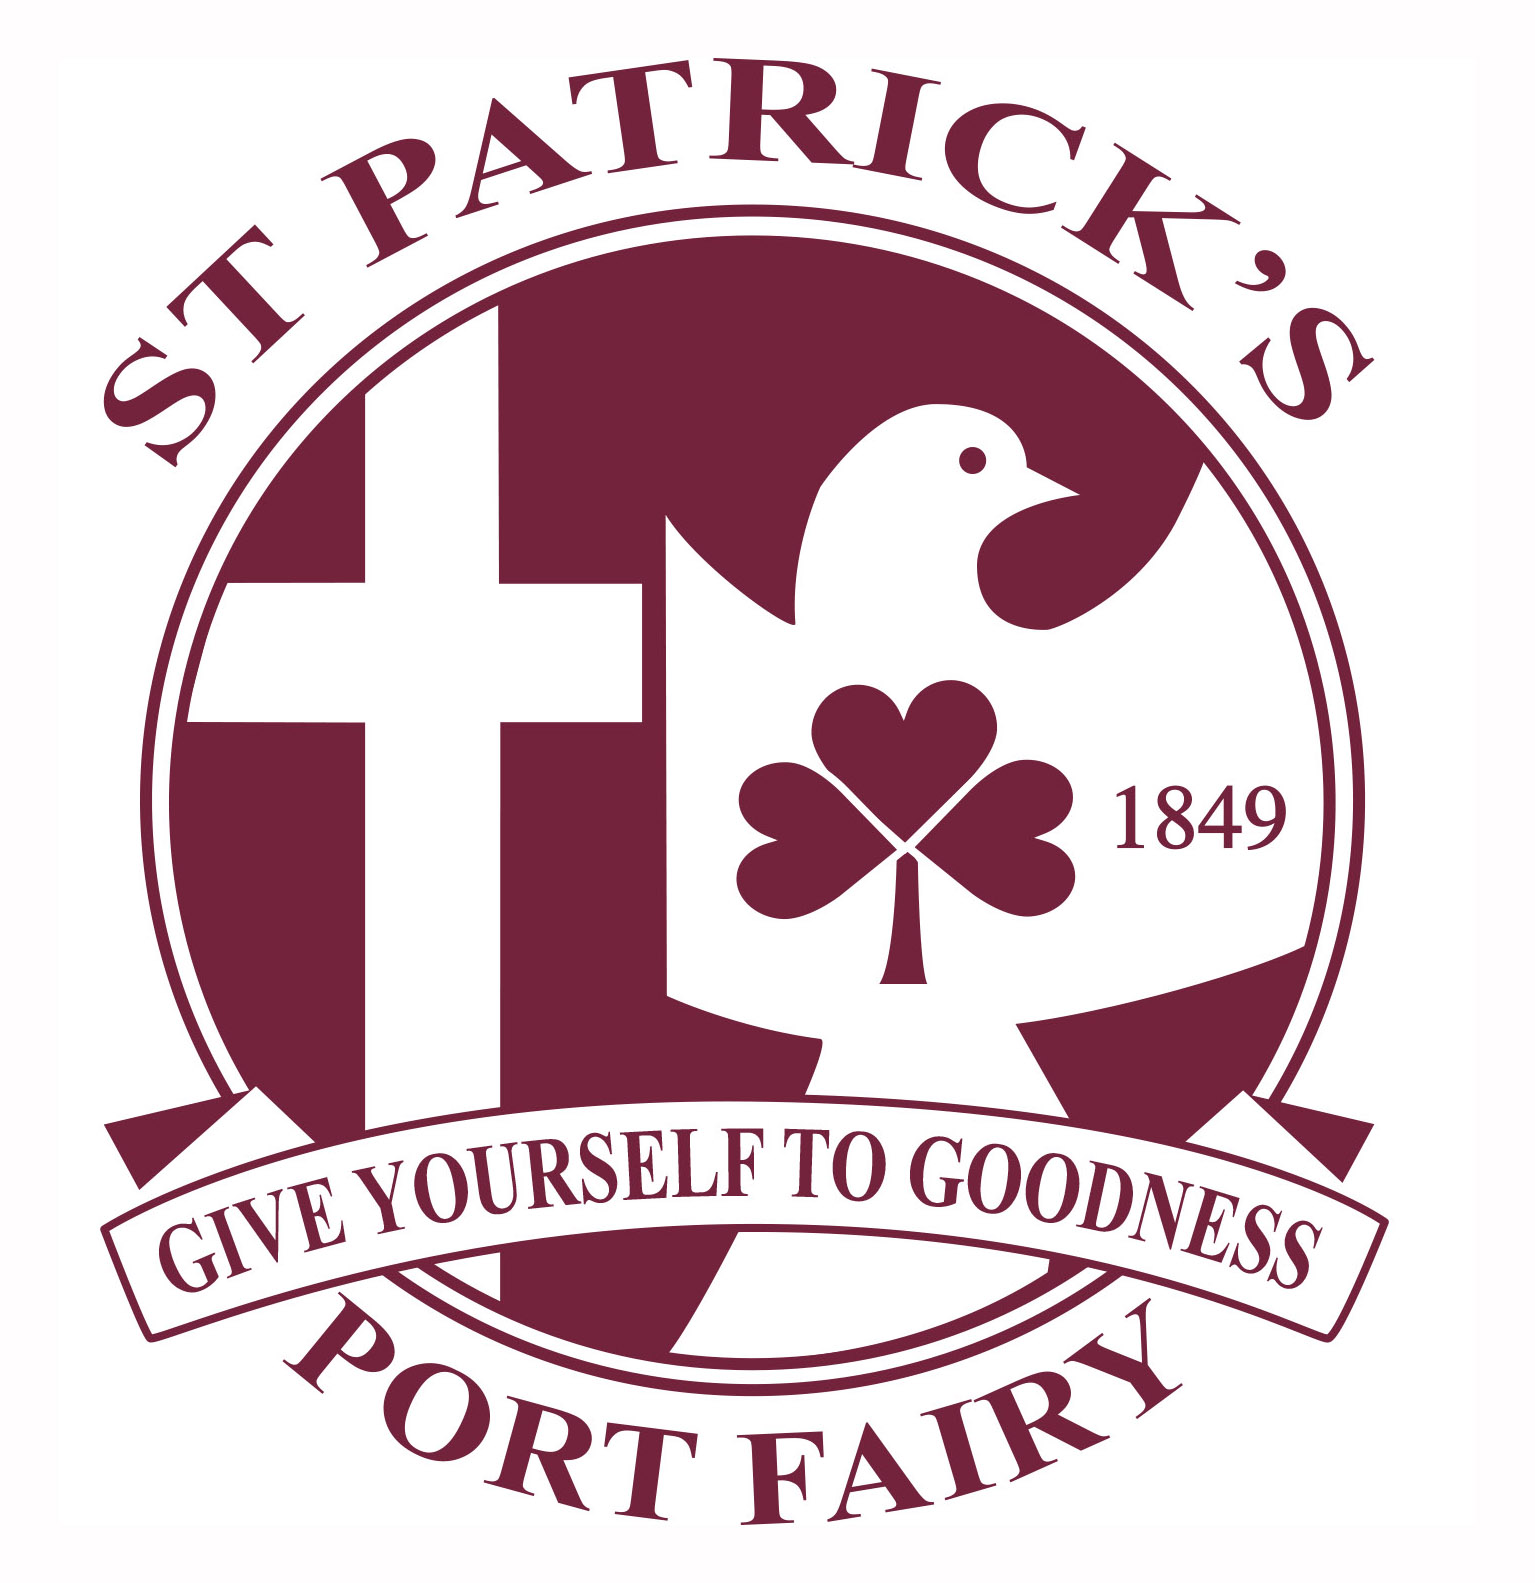 The Connected Circus Bendigo St Patrick’s PORT FAIRY School logo image